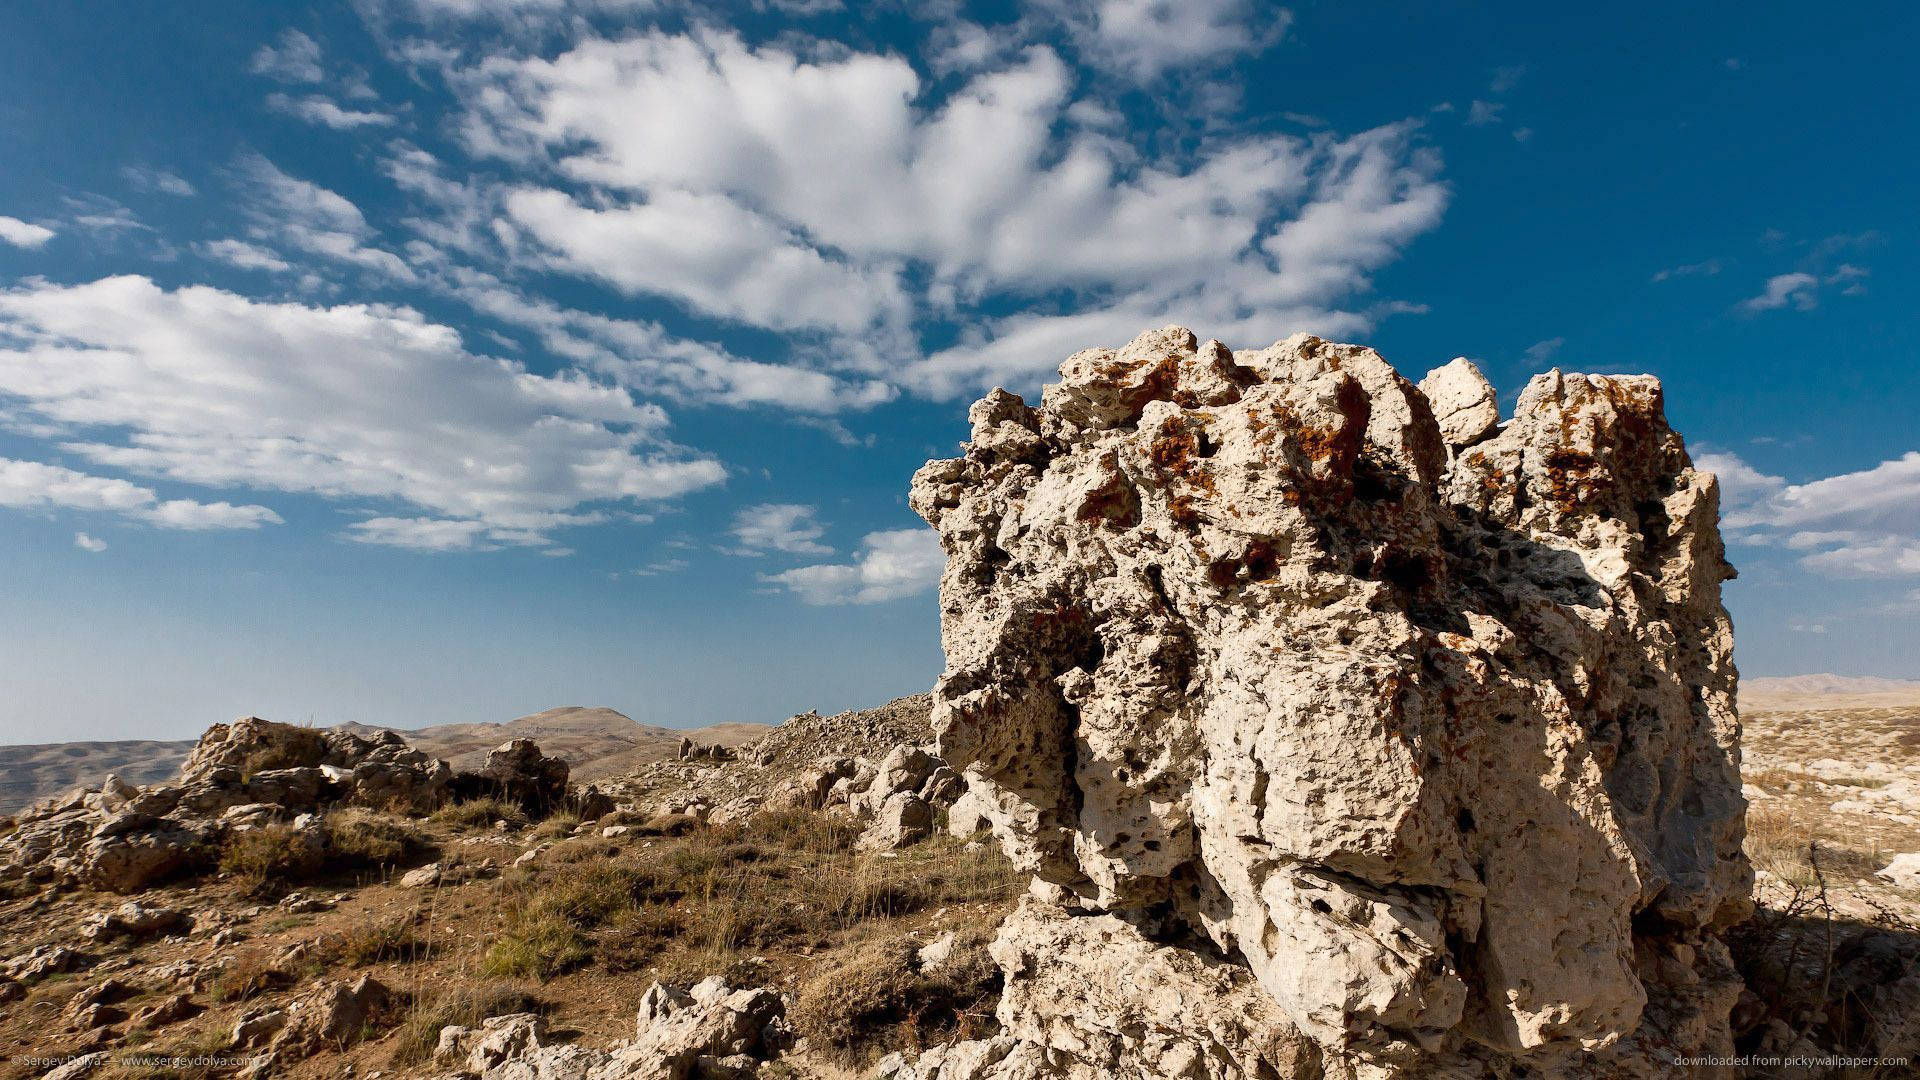 Lebanon Rock Formation Wallpaper